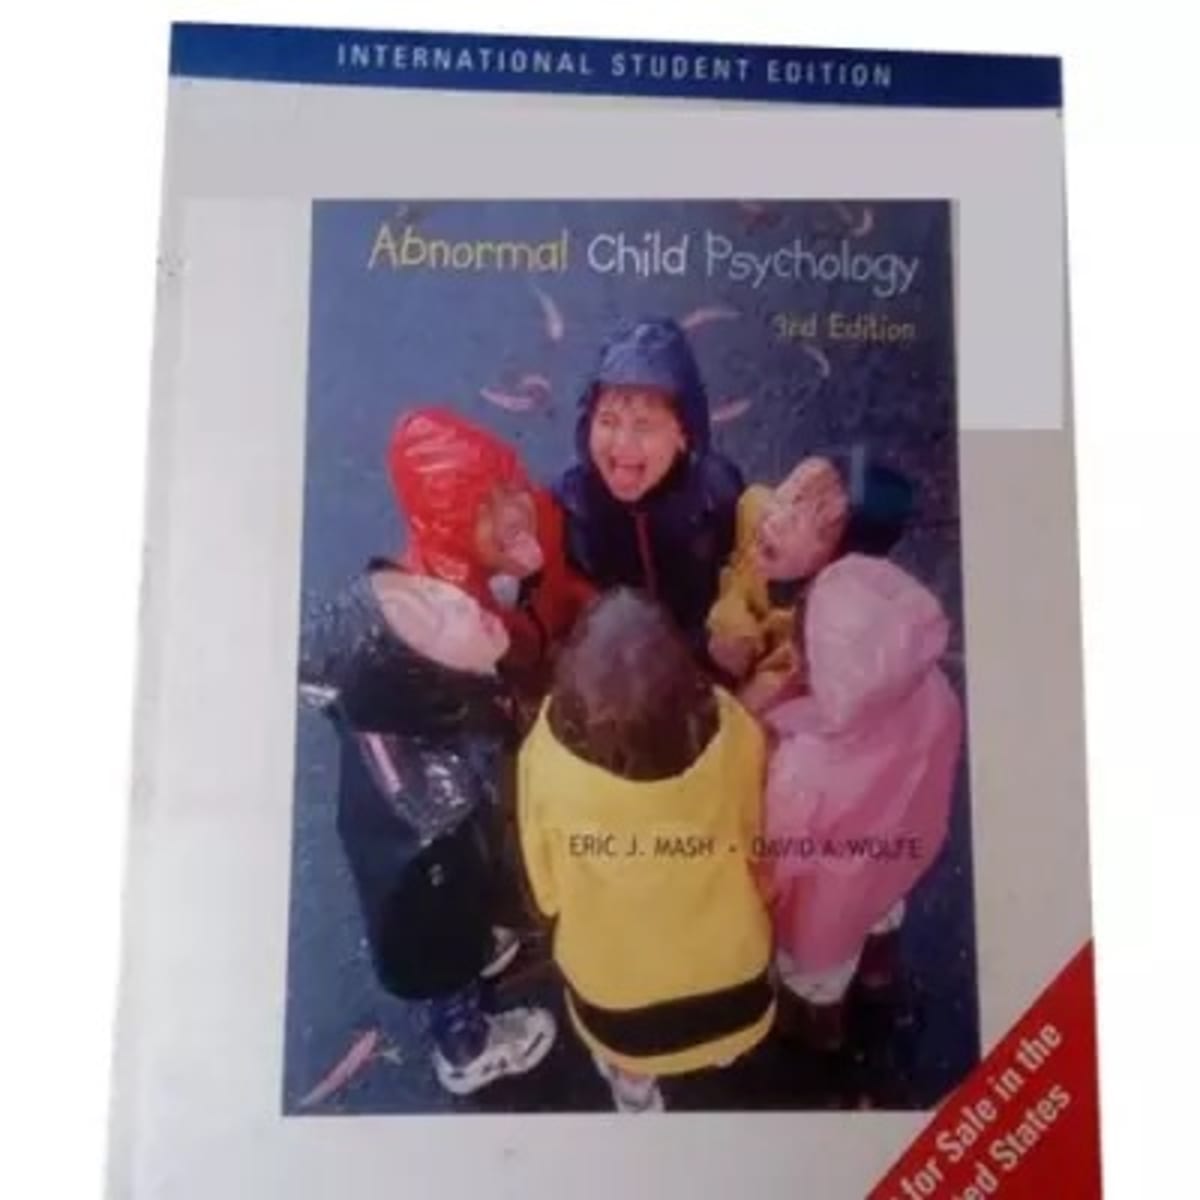 J.　David　By　Edition　Online　Psychology　Child　Abnormal　Eric　Konga　A.　Third　Wolfe　Mash,　Shopping